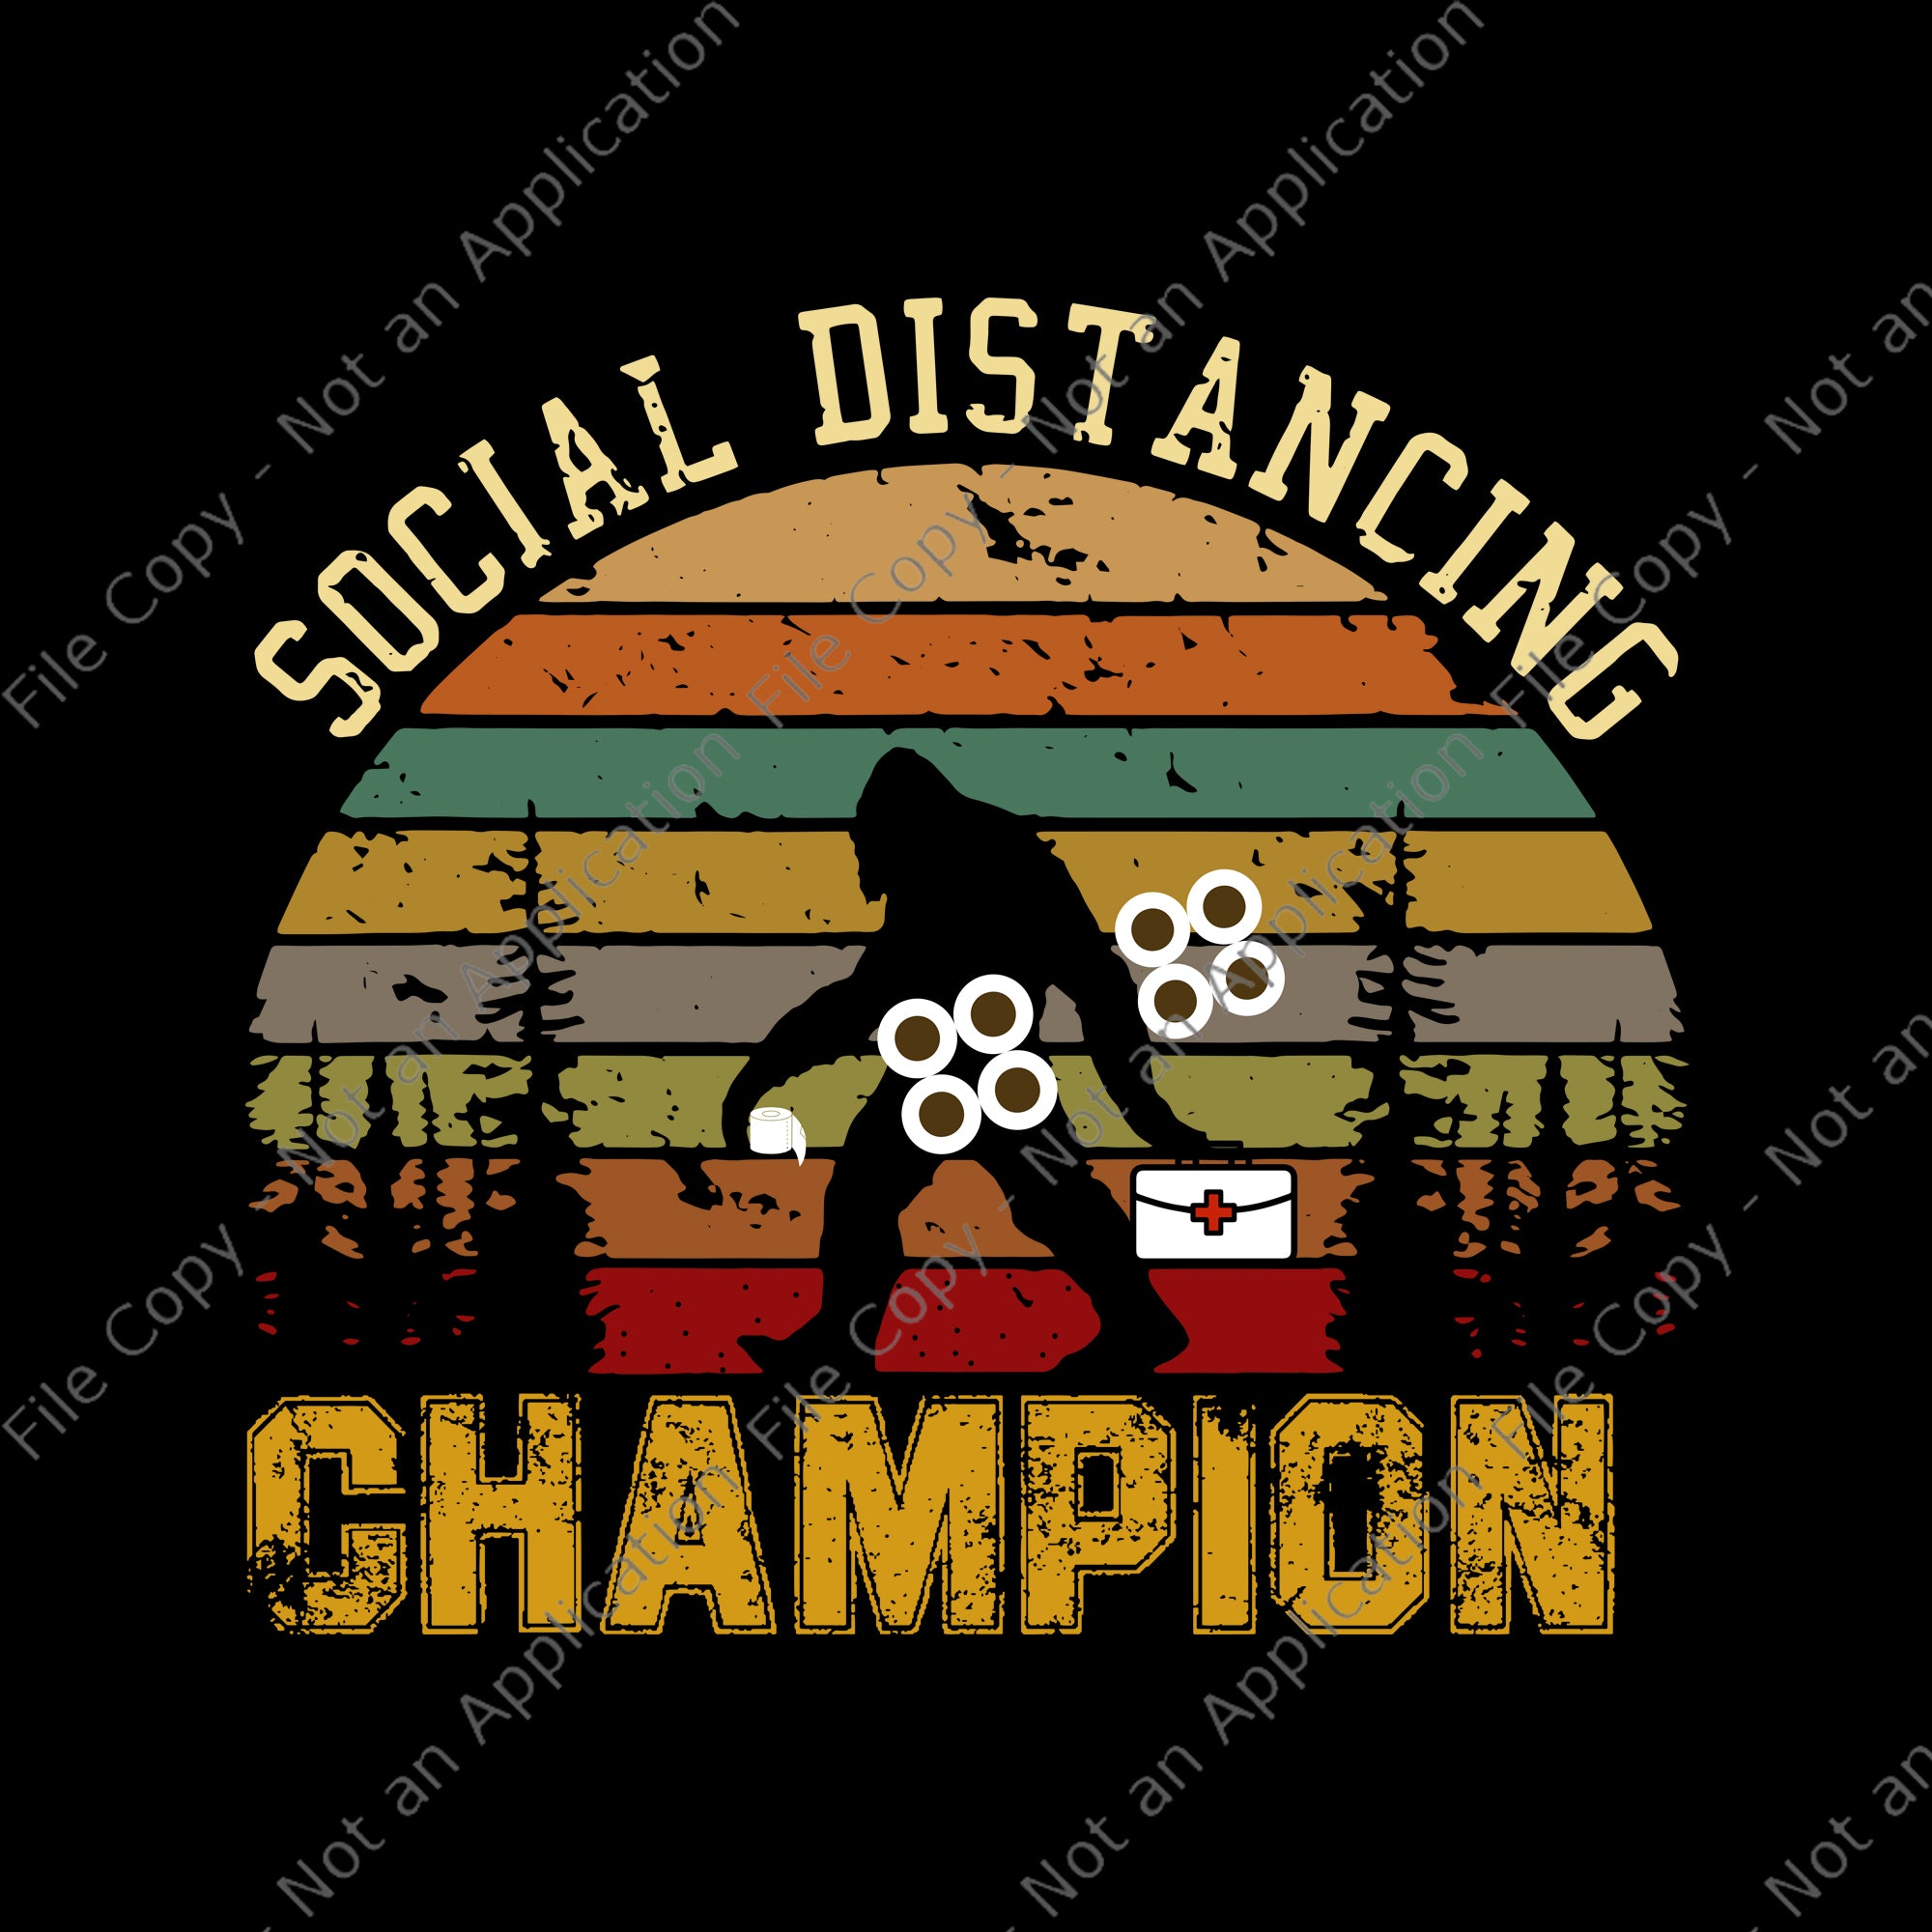 Social distancing champion svg, social distancing champion vintage svg, social distancing champion, vintage bigfoot and toilet paper